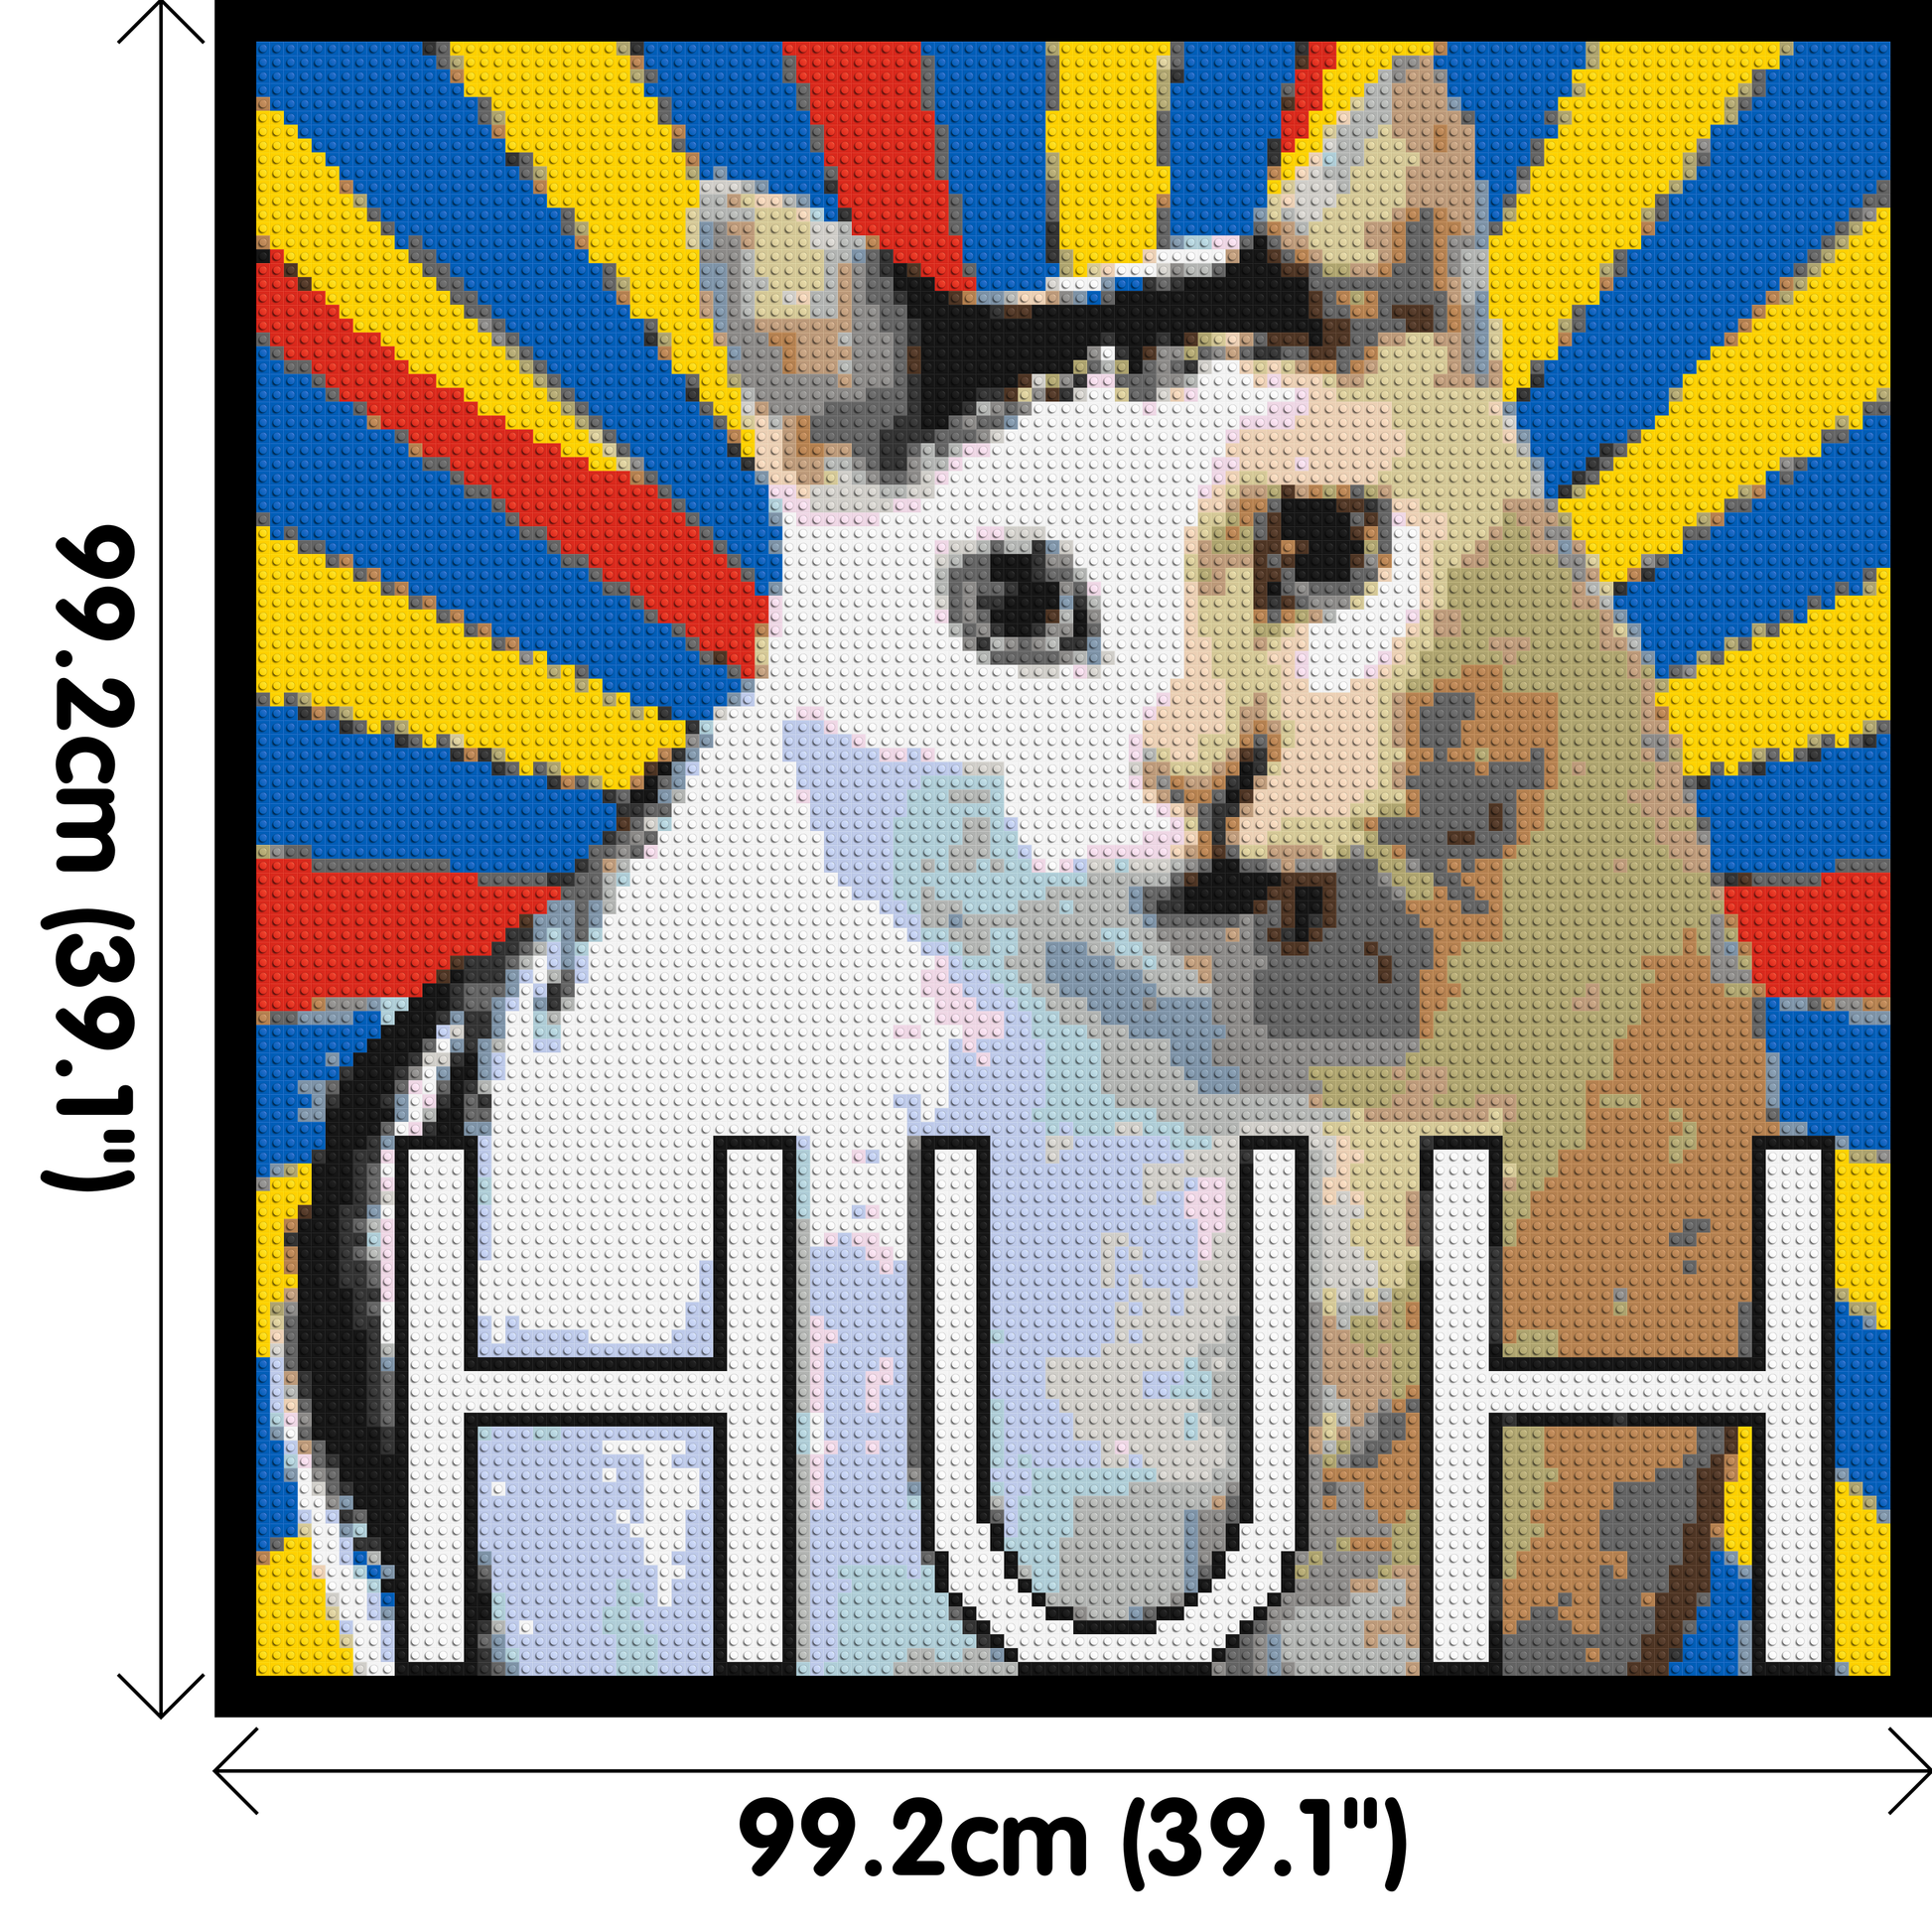 Huh Cat Meme - Brick Art Mosaic Kit 5x5 dimensions with frame